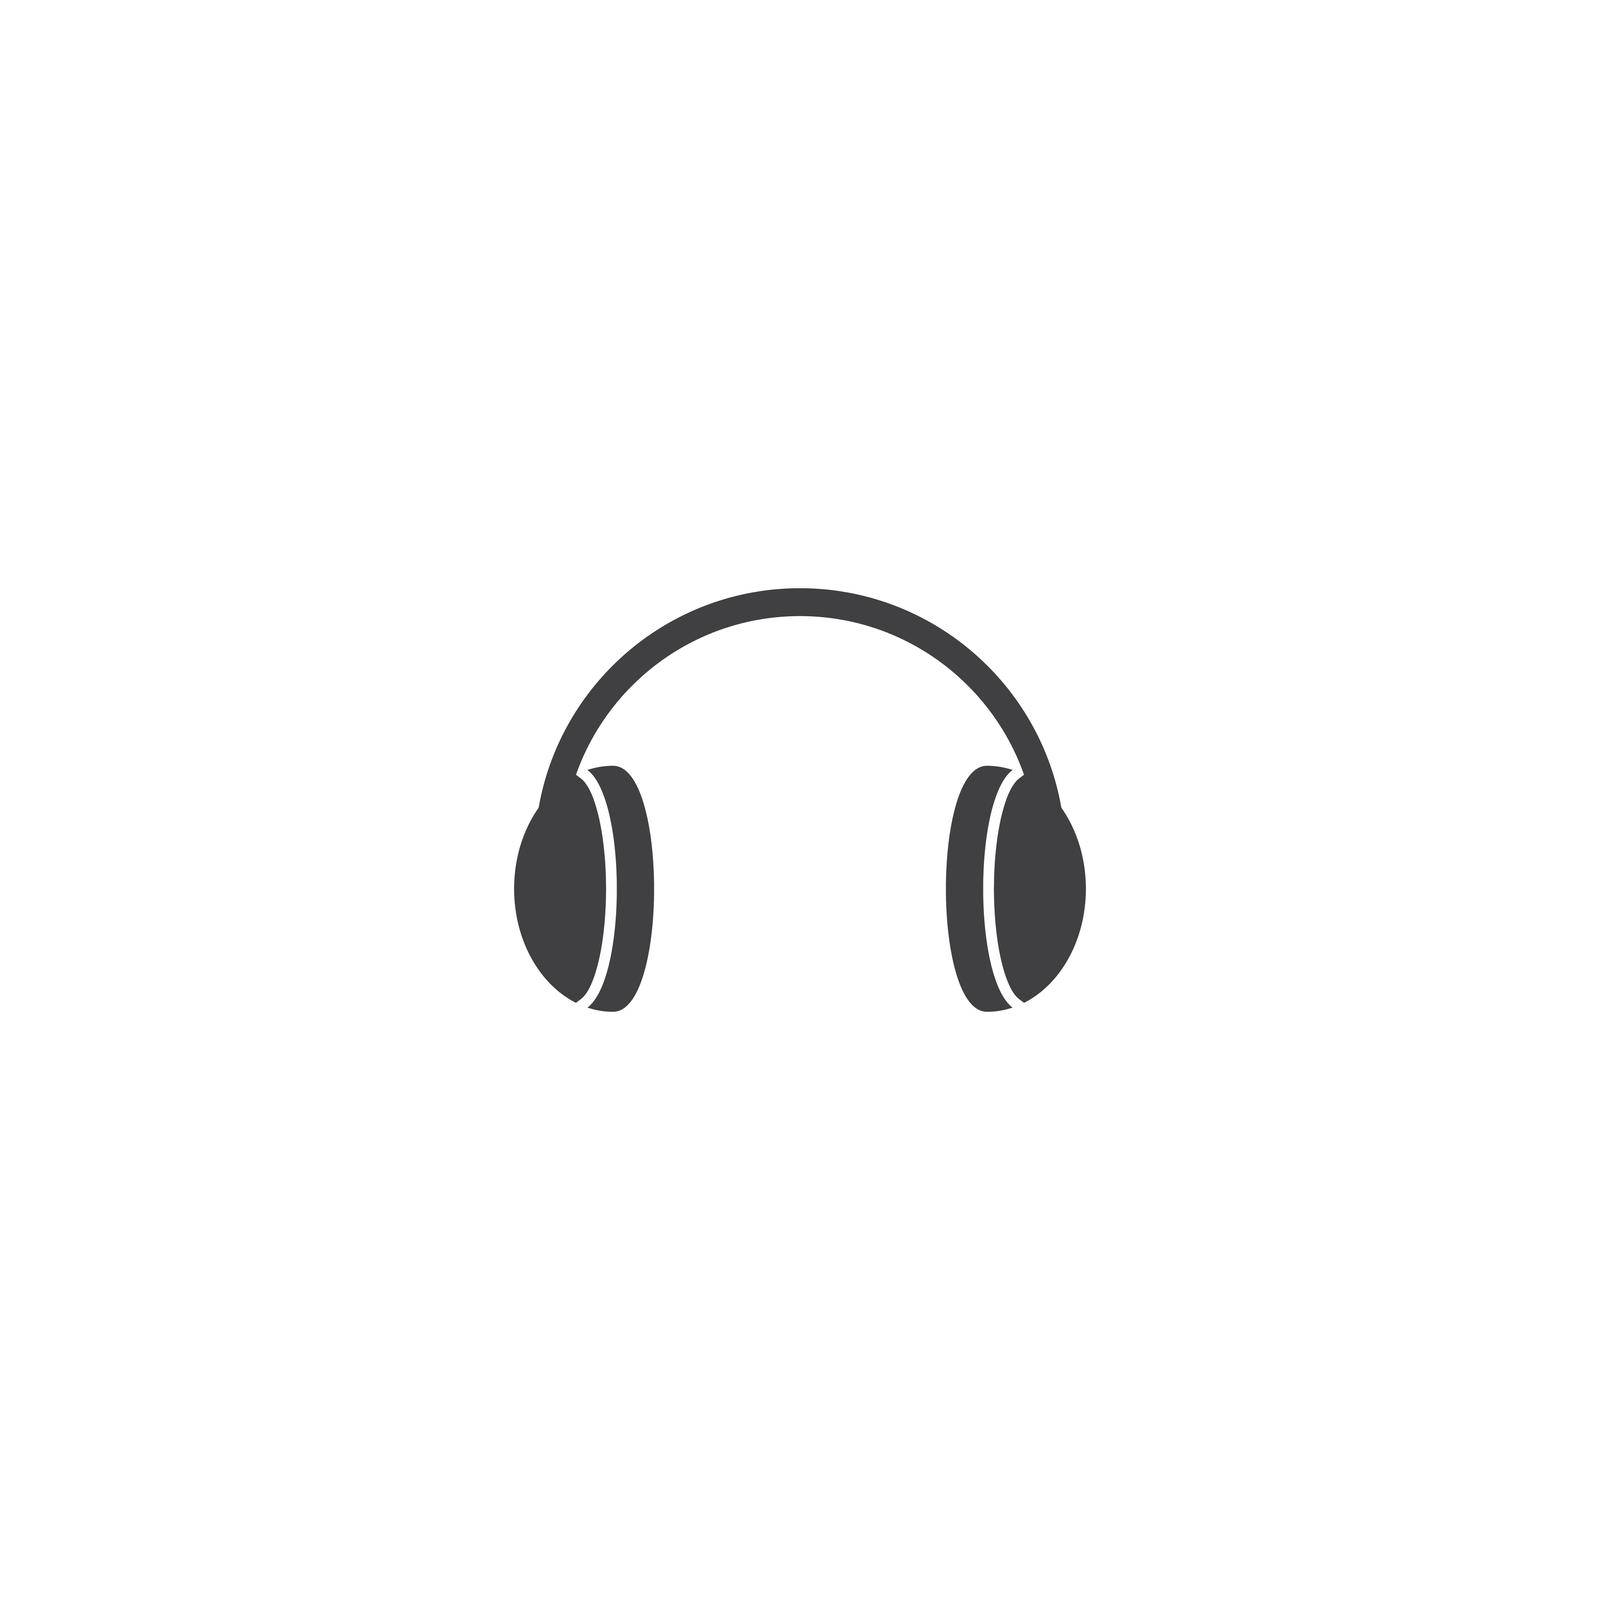 Headphone logo vector flat design